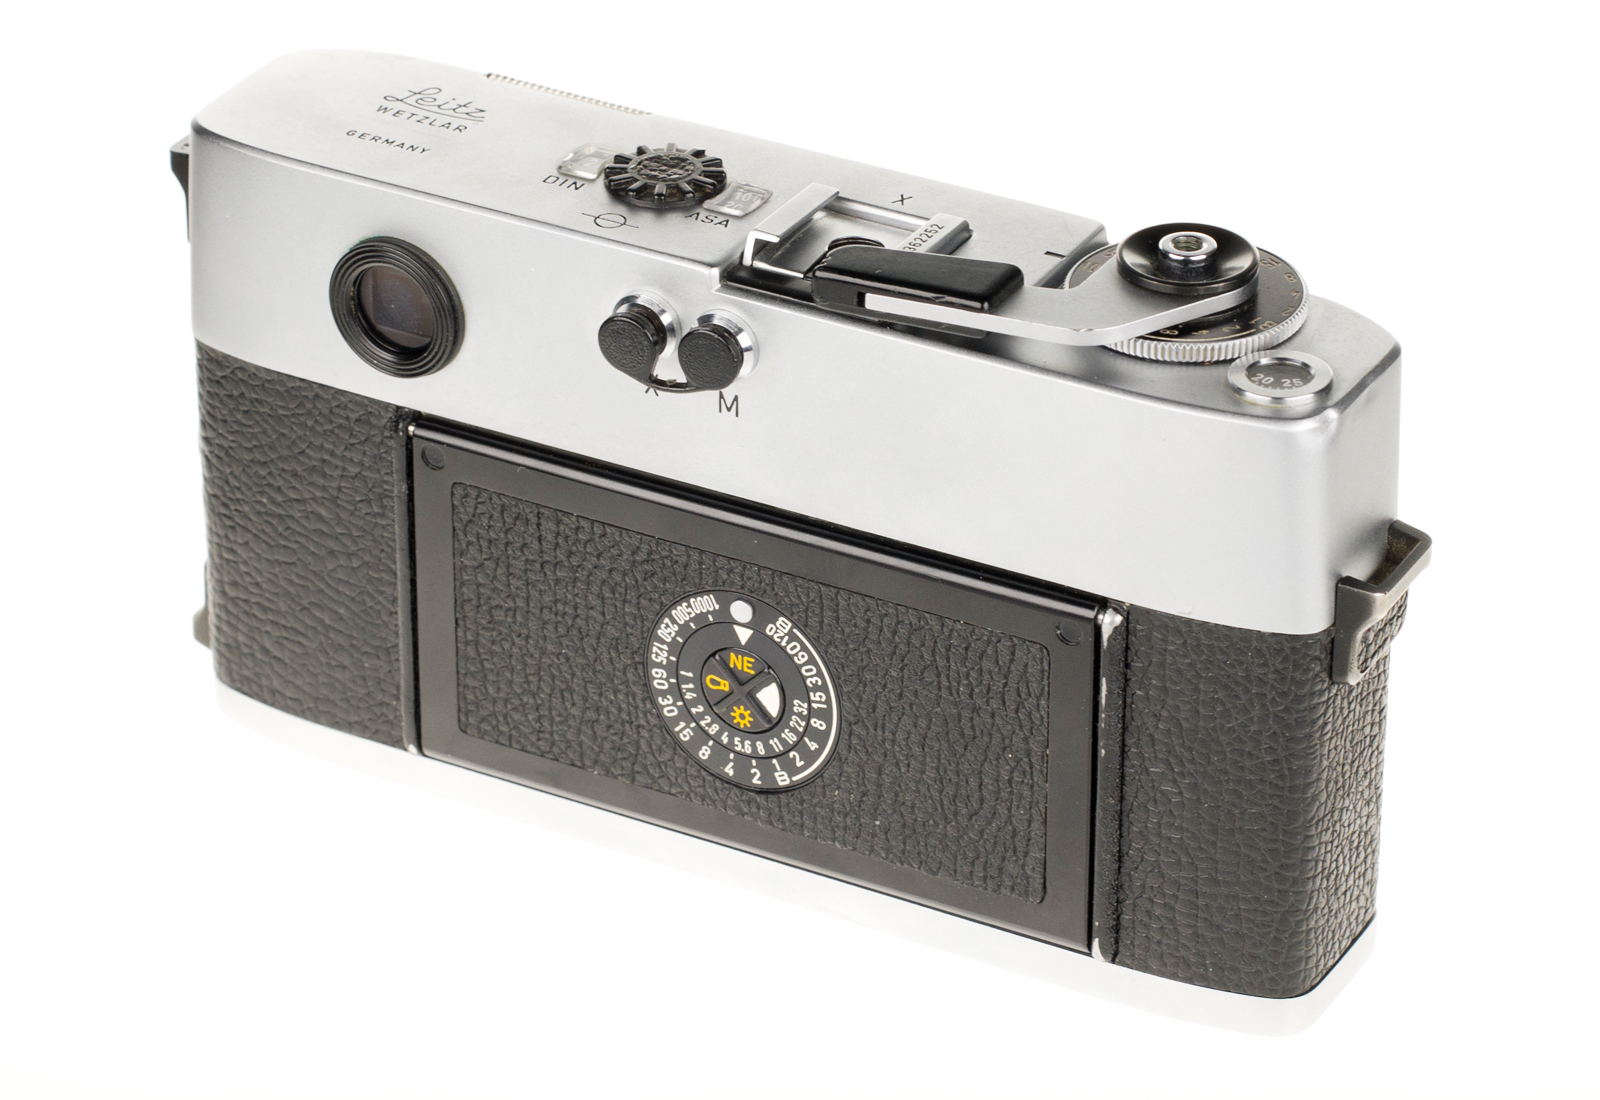 Leica M5, silbern verchromt